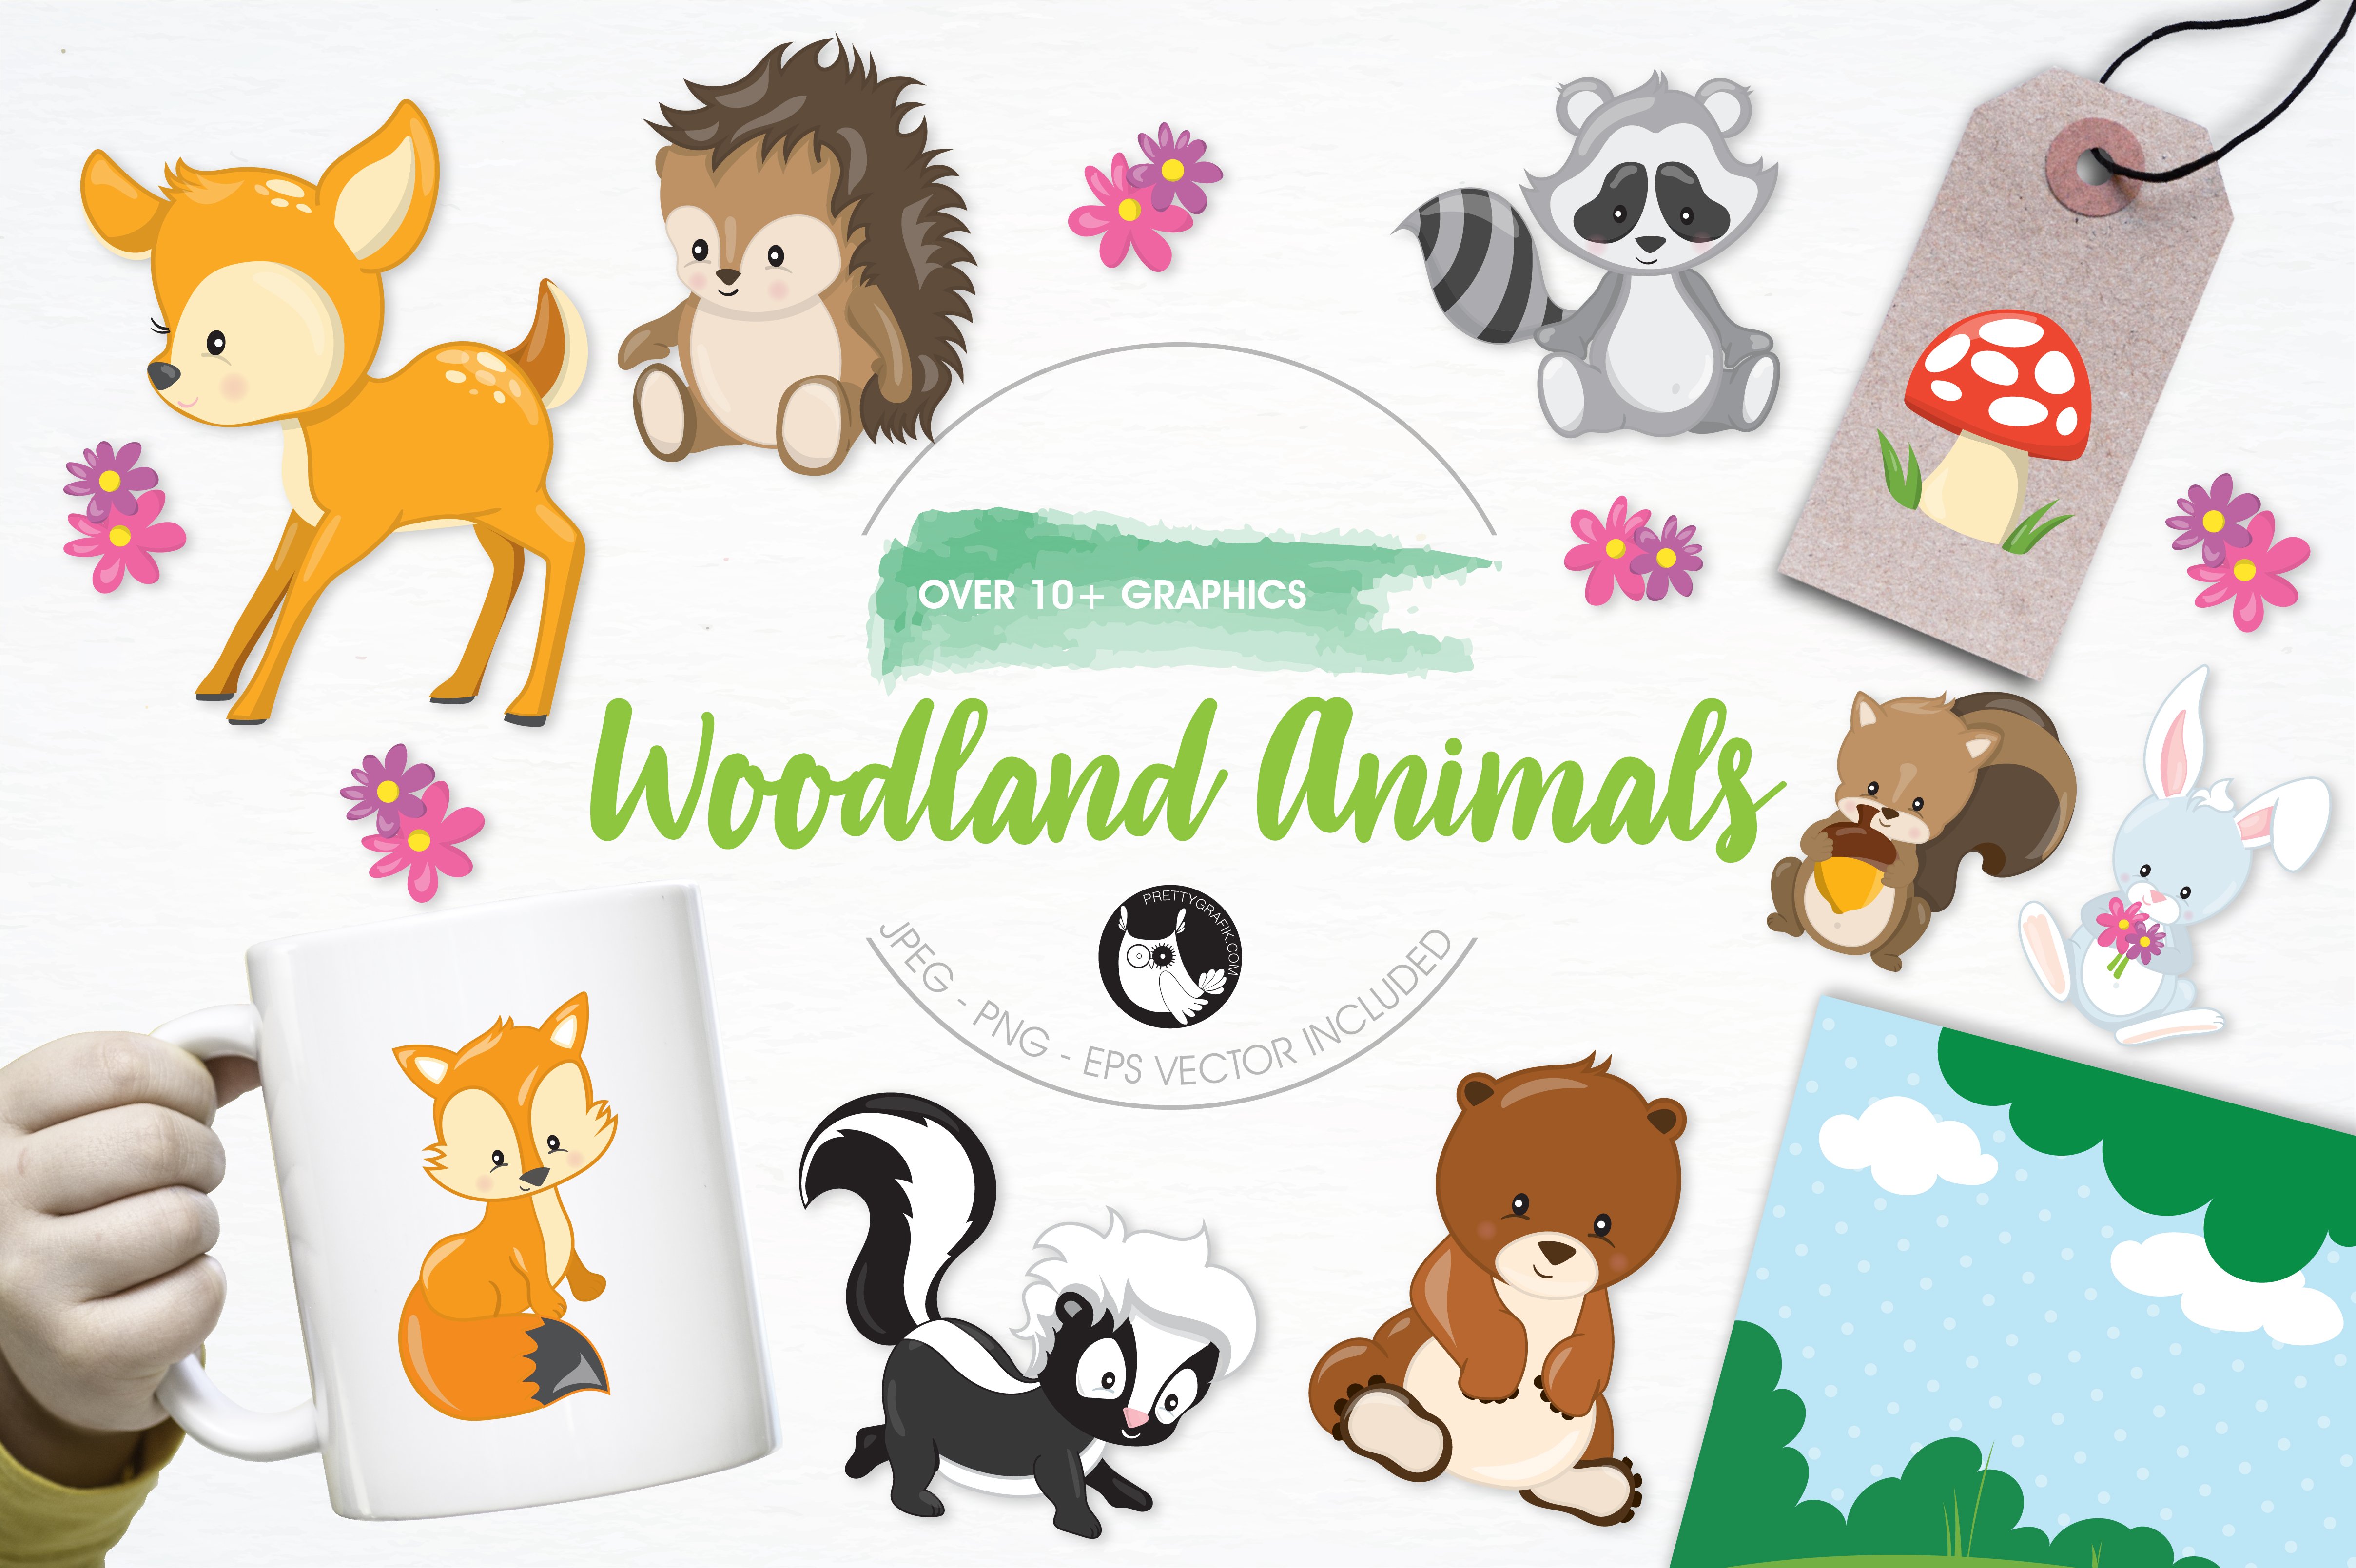 Woodland animals illustration pack cover image.